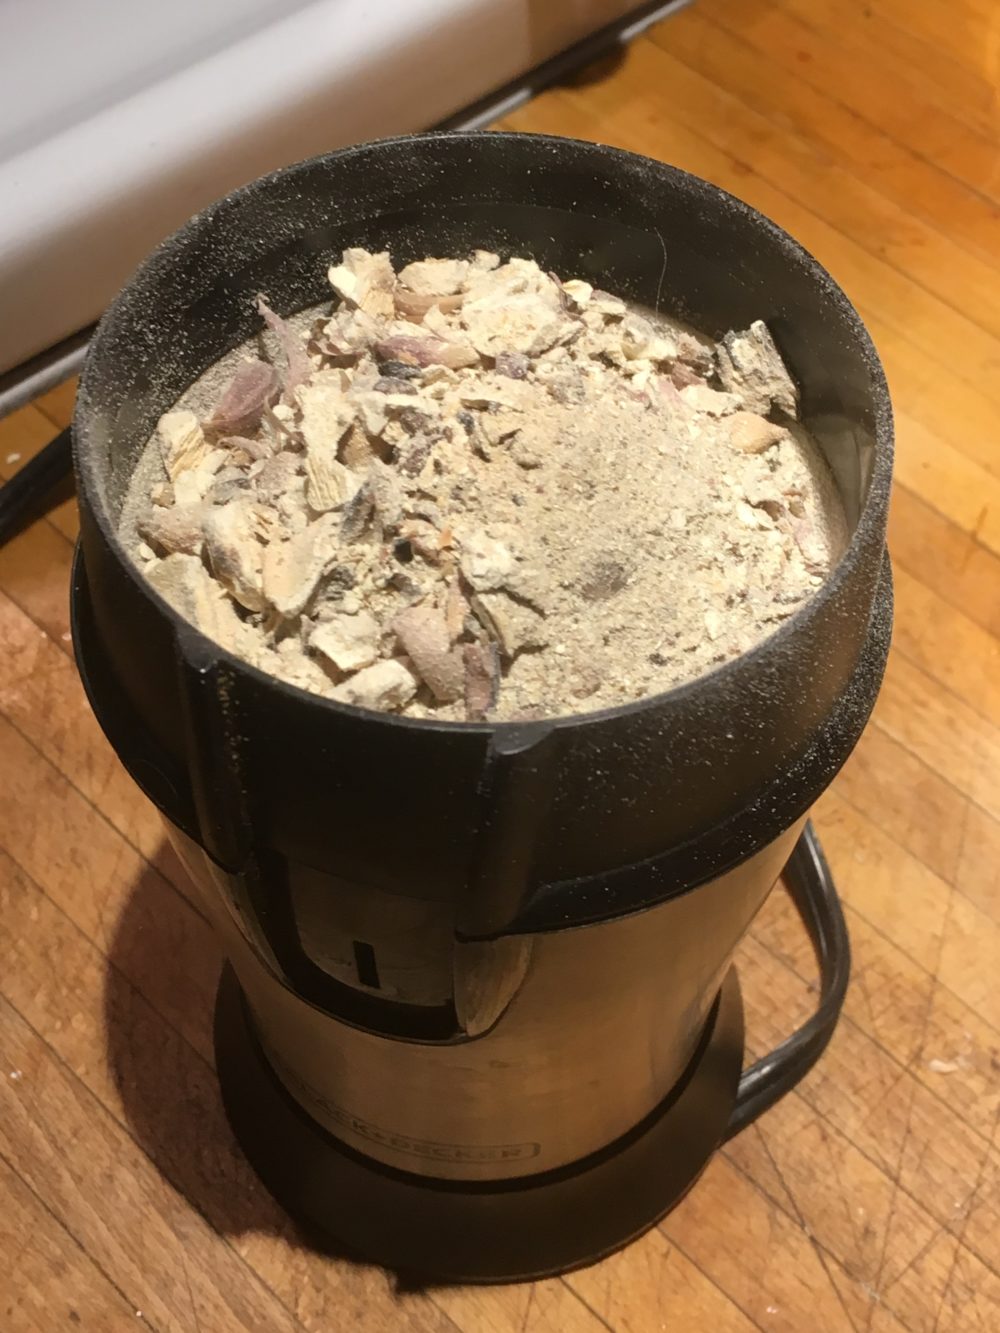 Pulverize in a coffee grinder